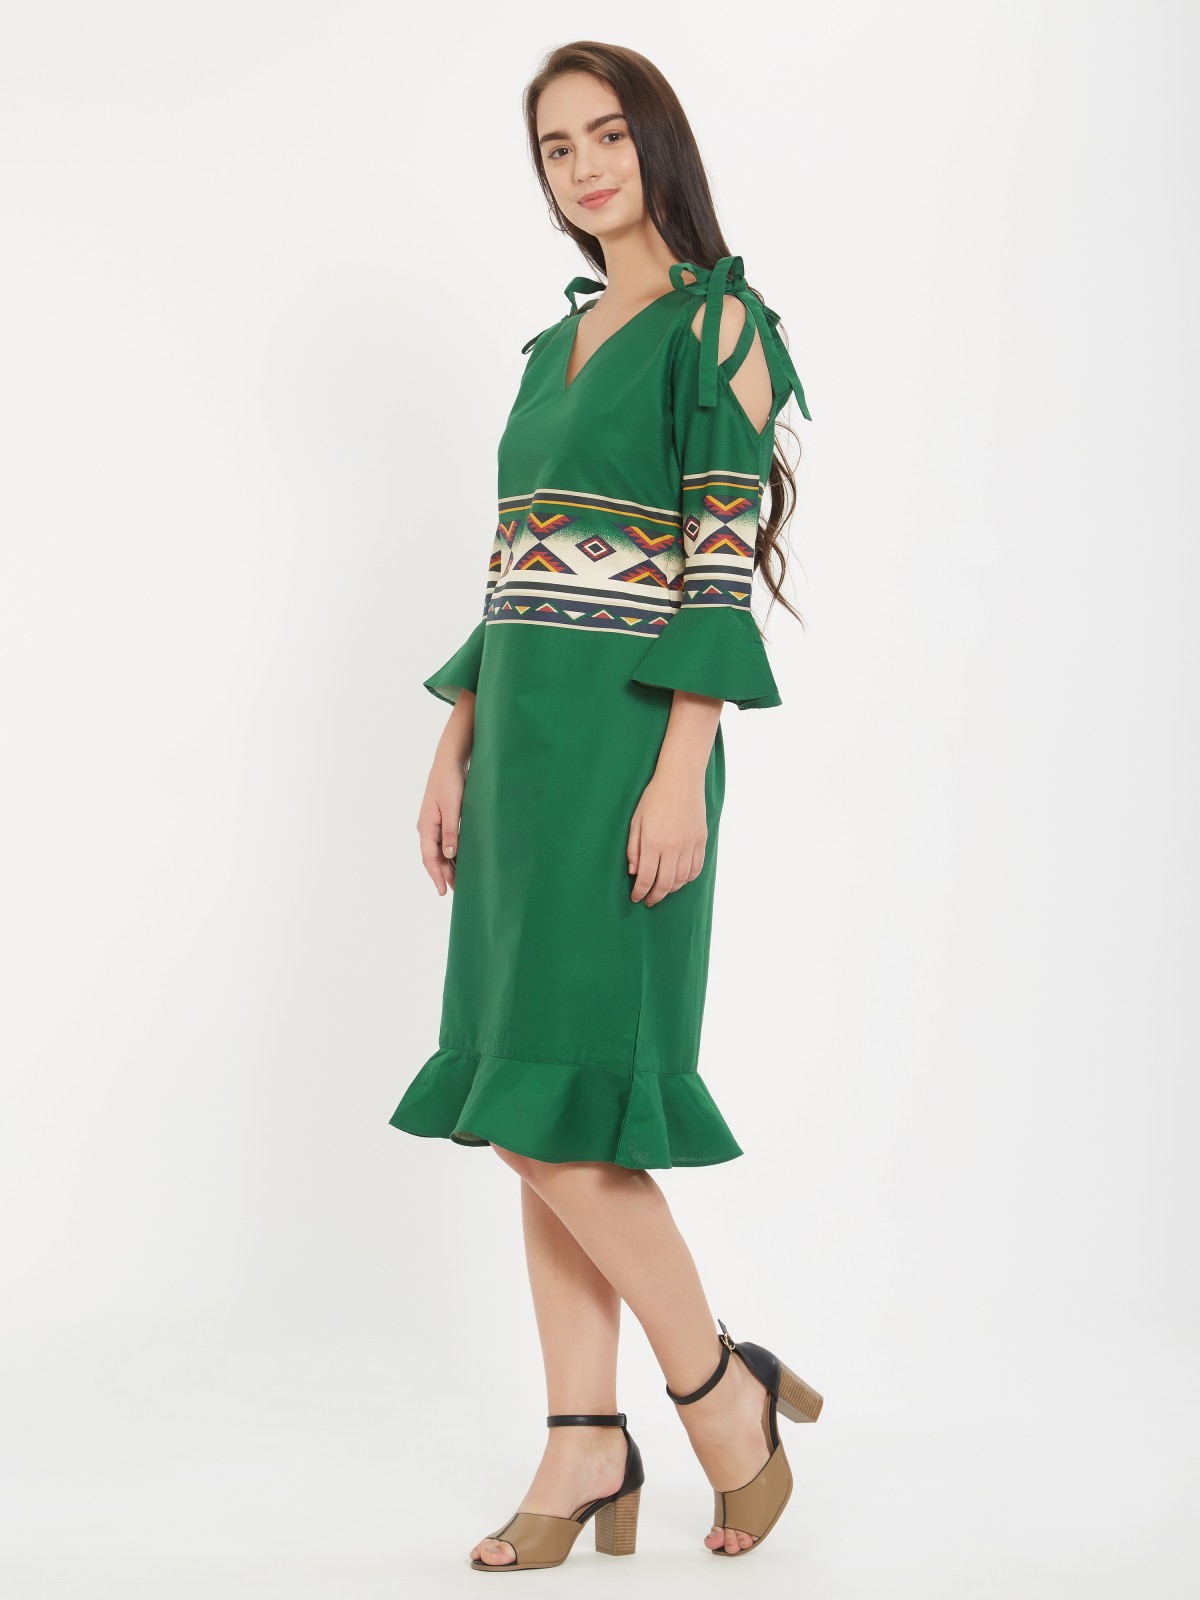 Elegore Exclusive Cotton Solid Green Aztec Printed Midi Dress